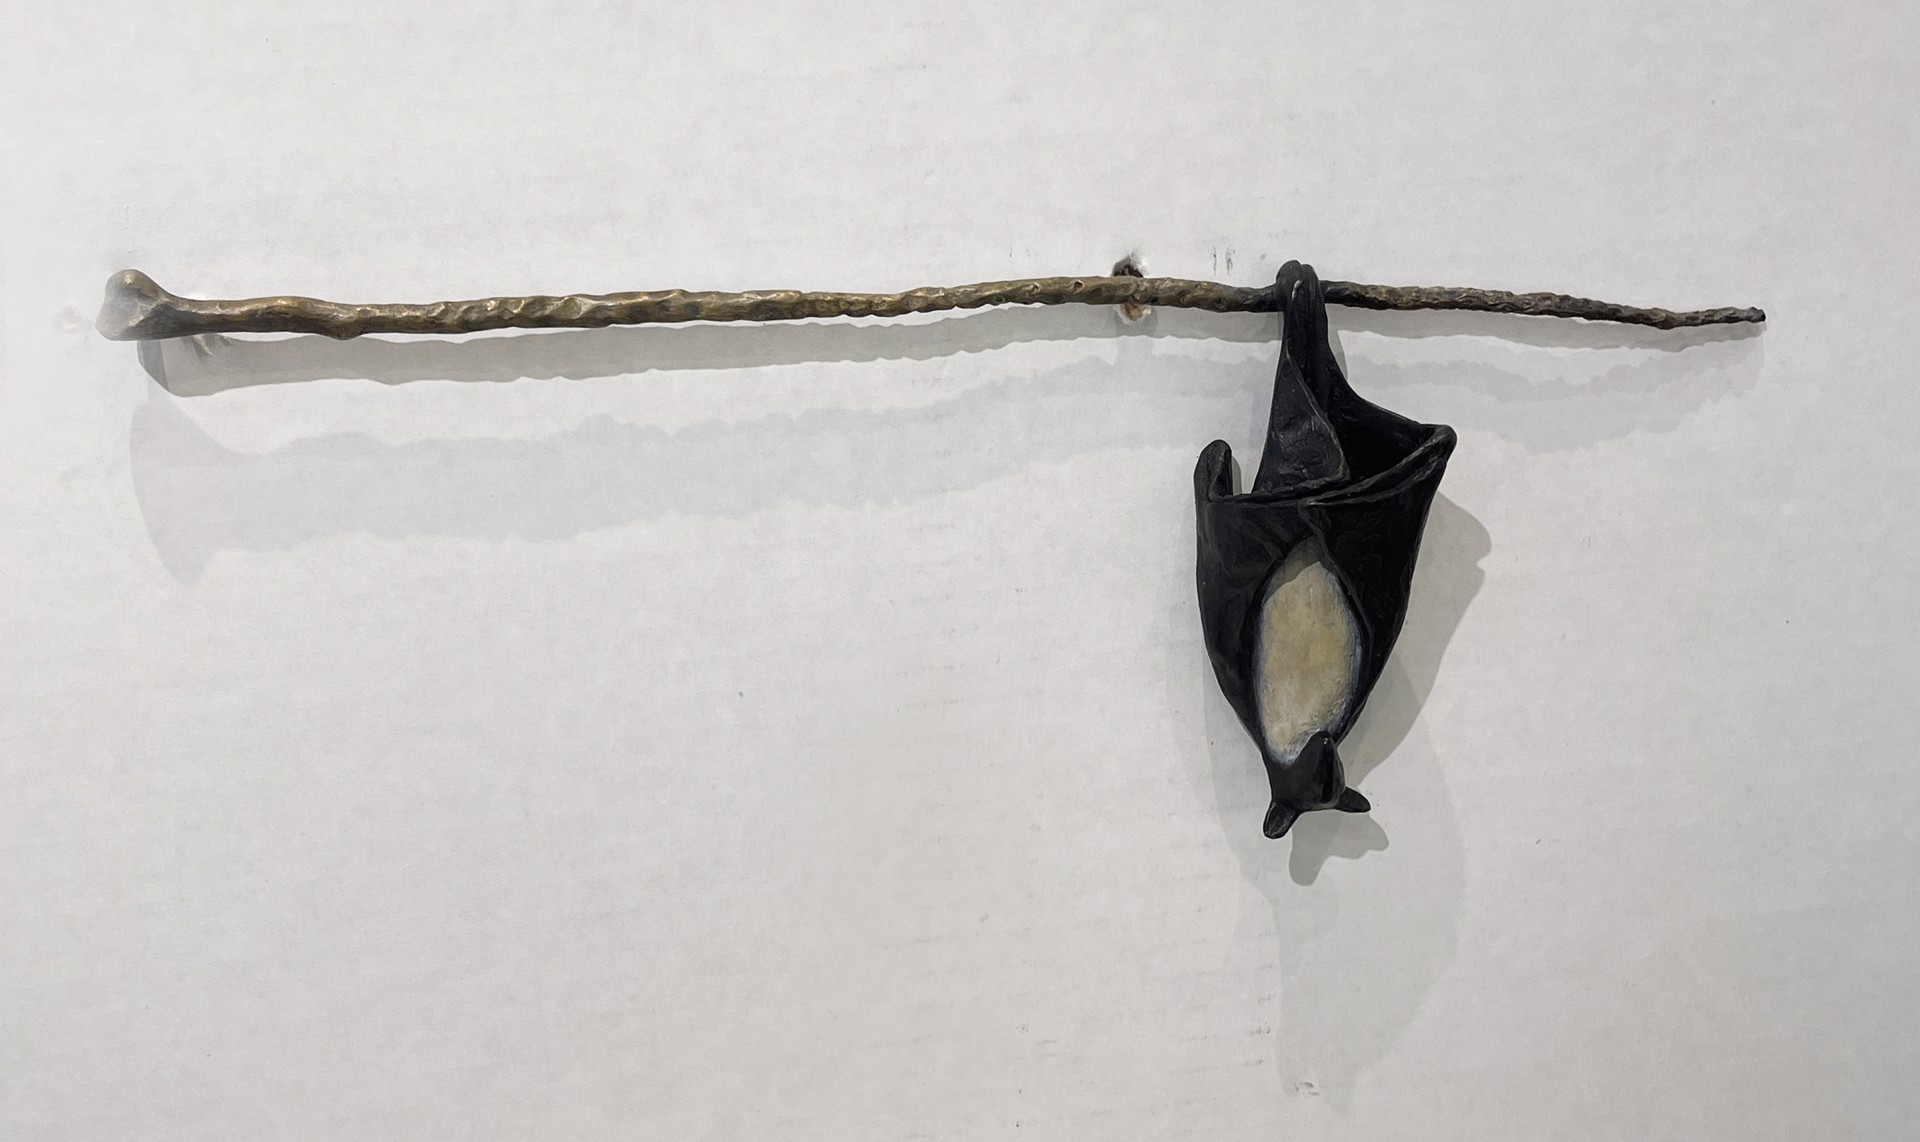 1 Temple Bat on a Branch by Copper Tritscheller